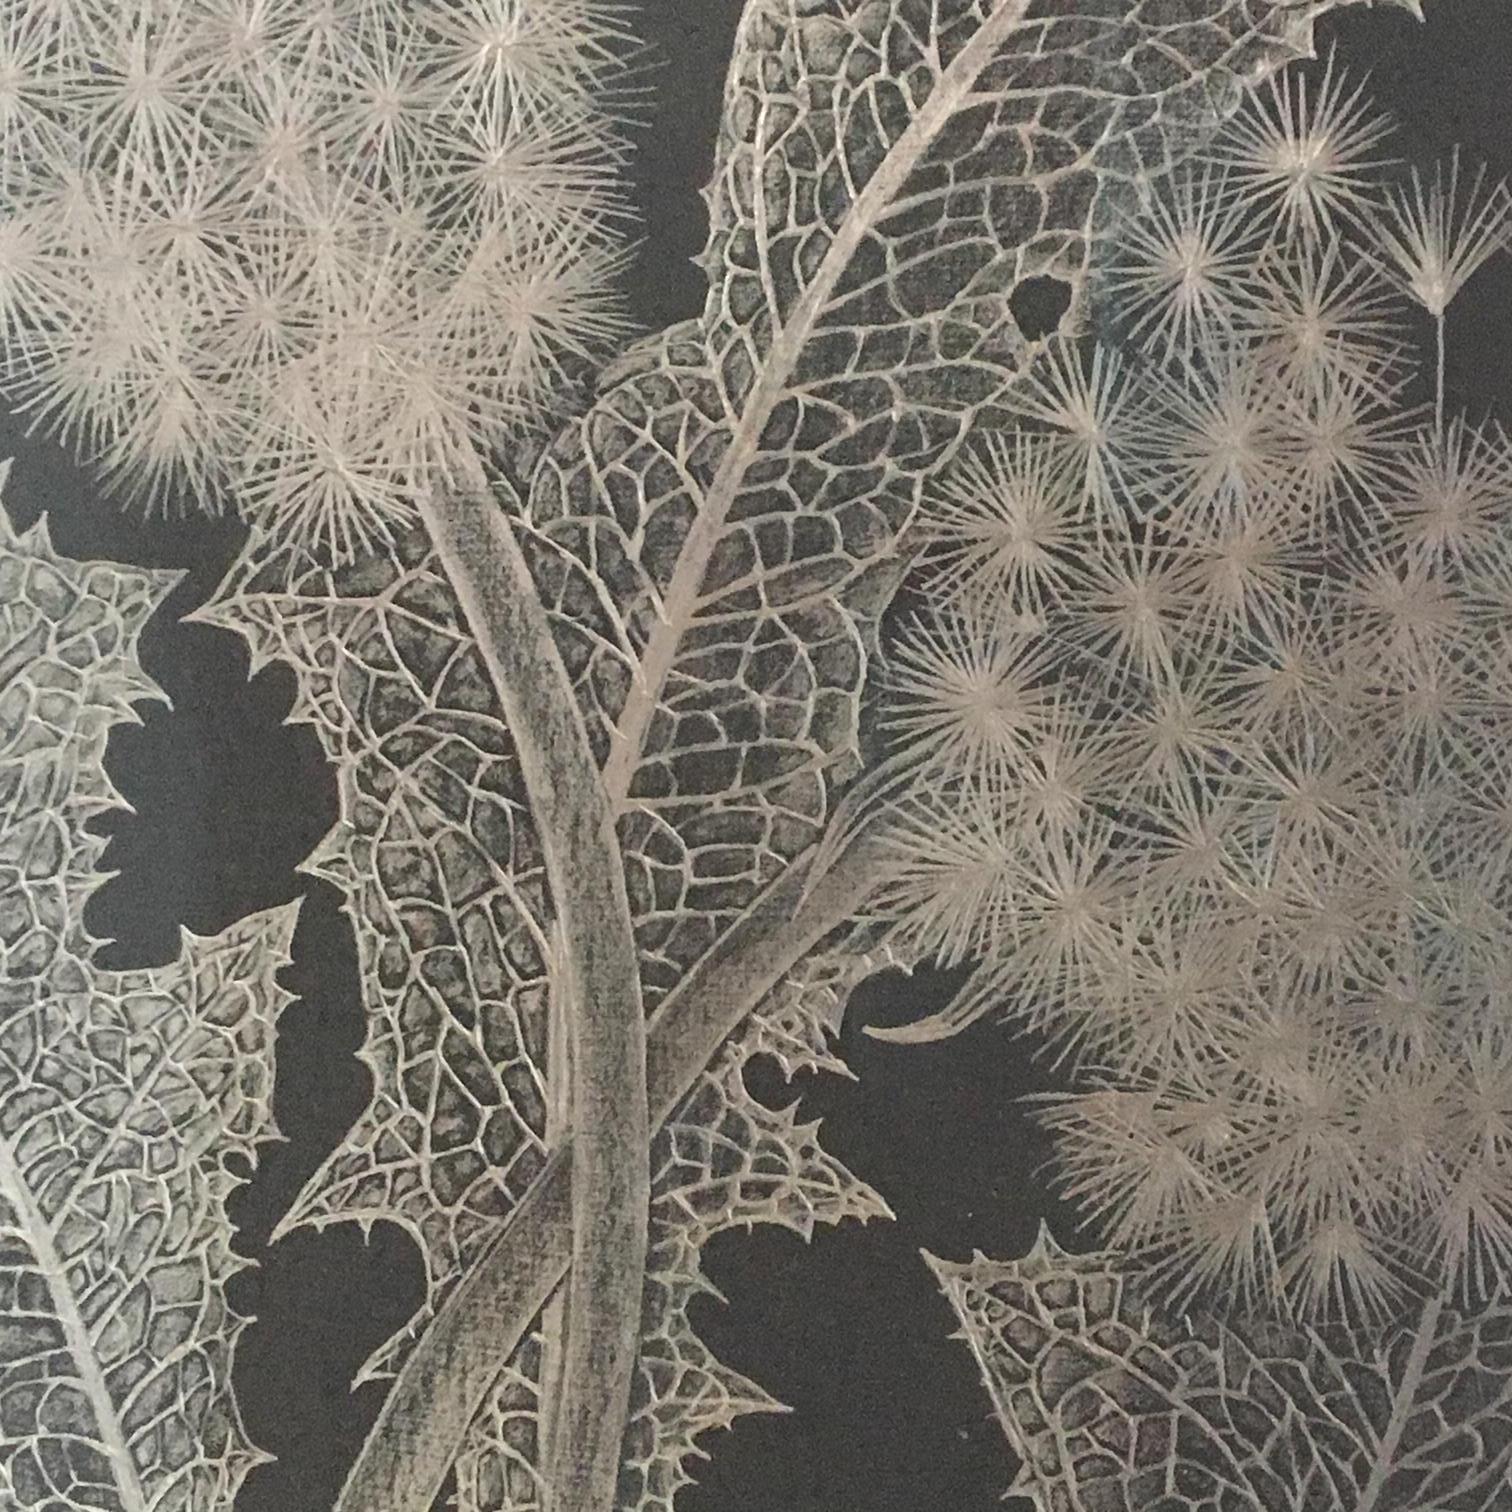 Two Dandelions Two, Metallic Silver Botanical Graphite Drawing, Black, Plant 4